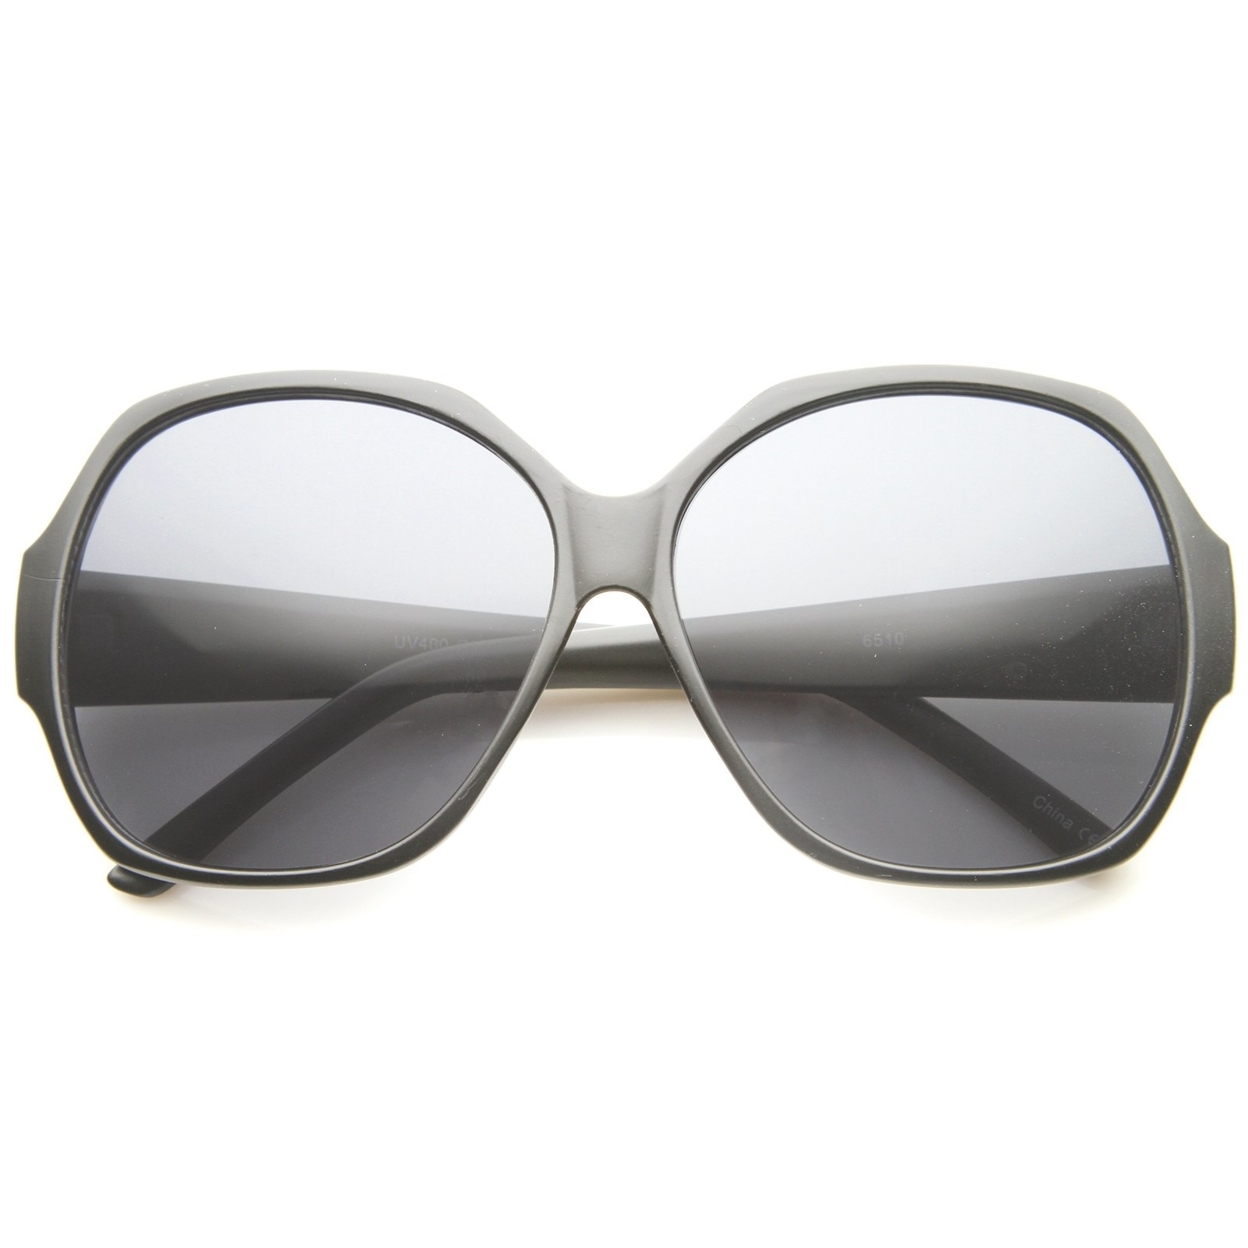 Women's High Fashion Wide Temple Oversize Square Sunglasses 58mm - Shiny Black / Lavender